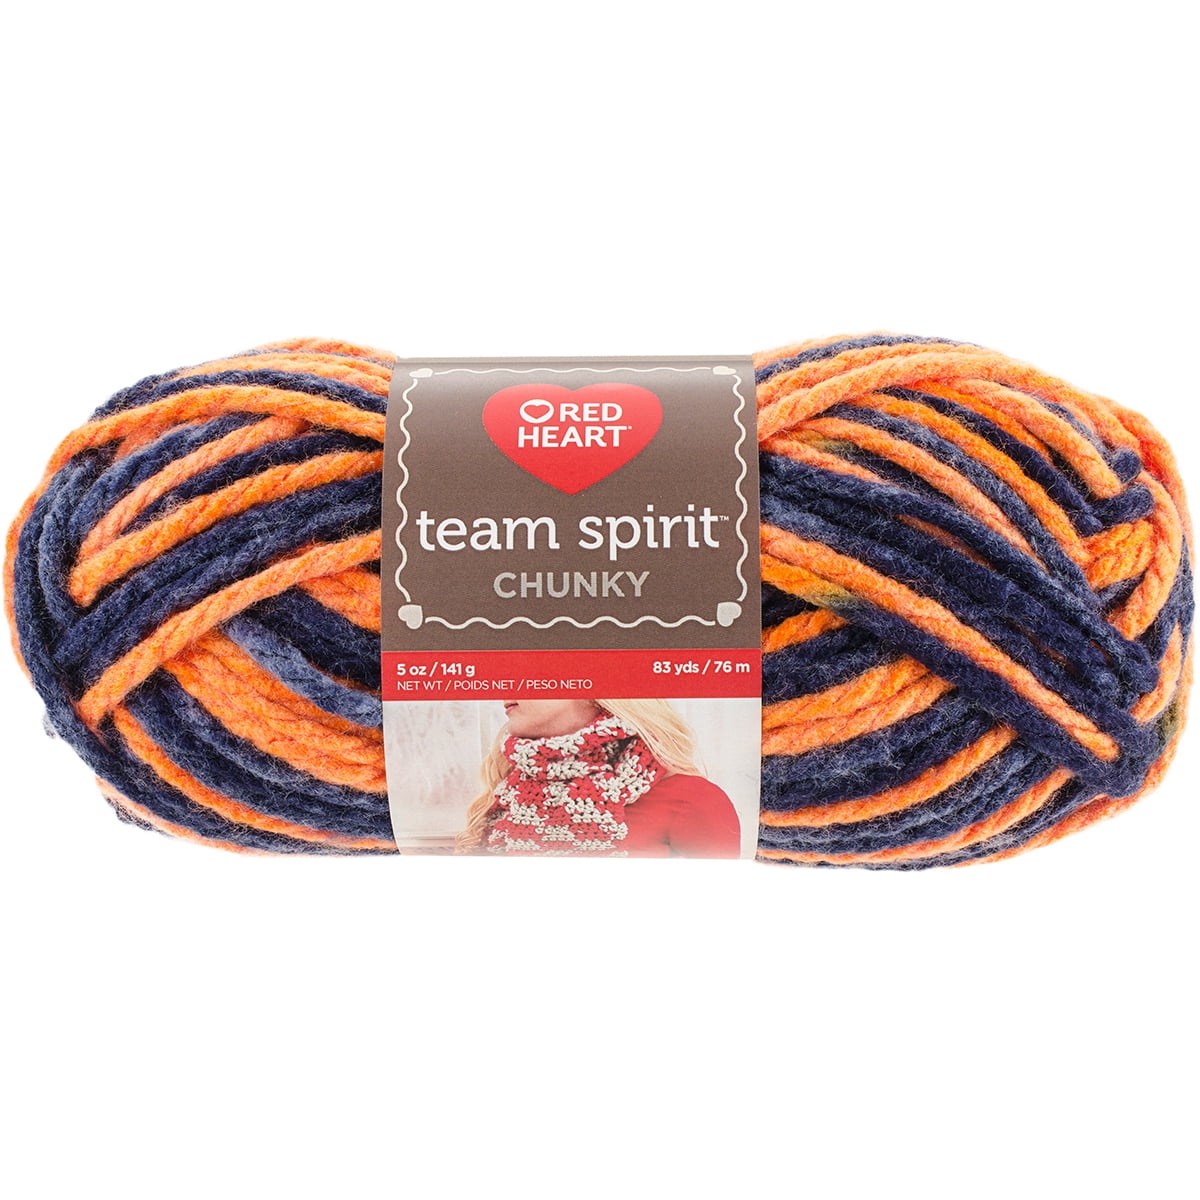 Merlot Red Chunky Knit Yarn – Makers Craft & Paint Nite Kits